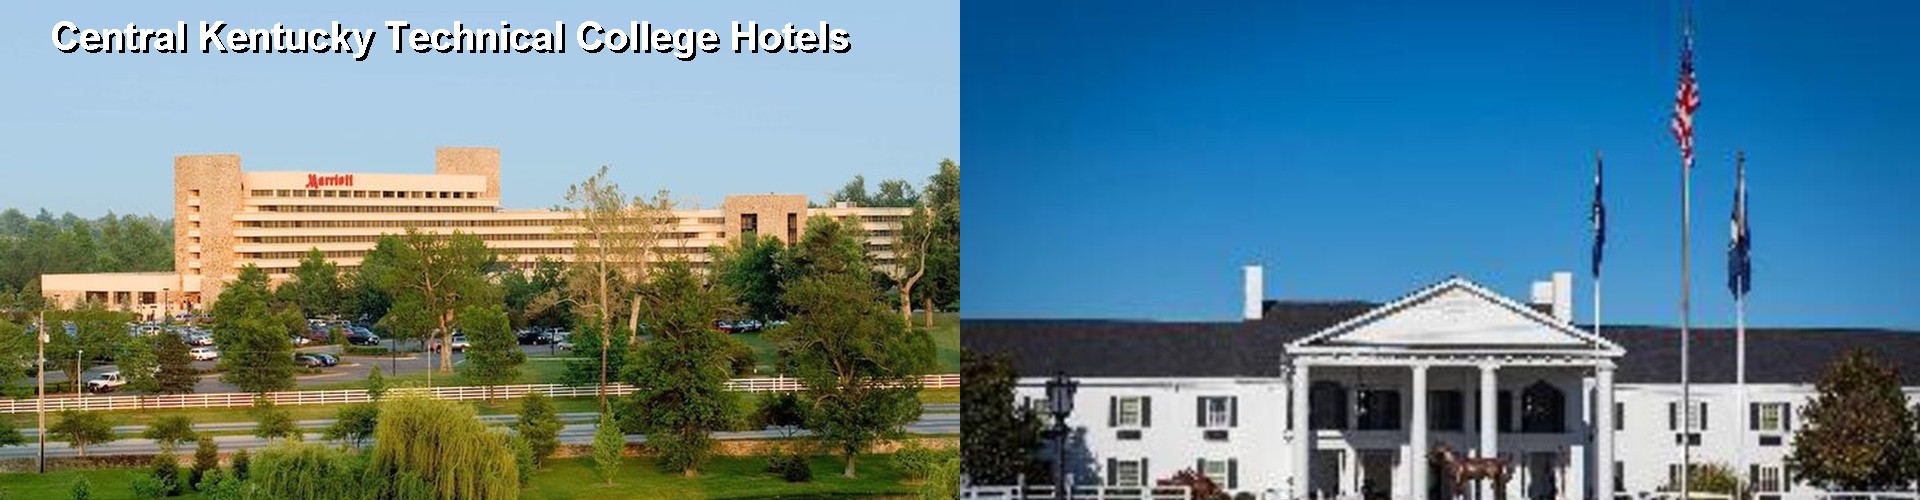 5 Best Hotels near Central Kentucky Technical College